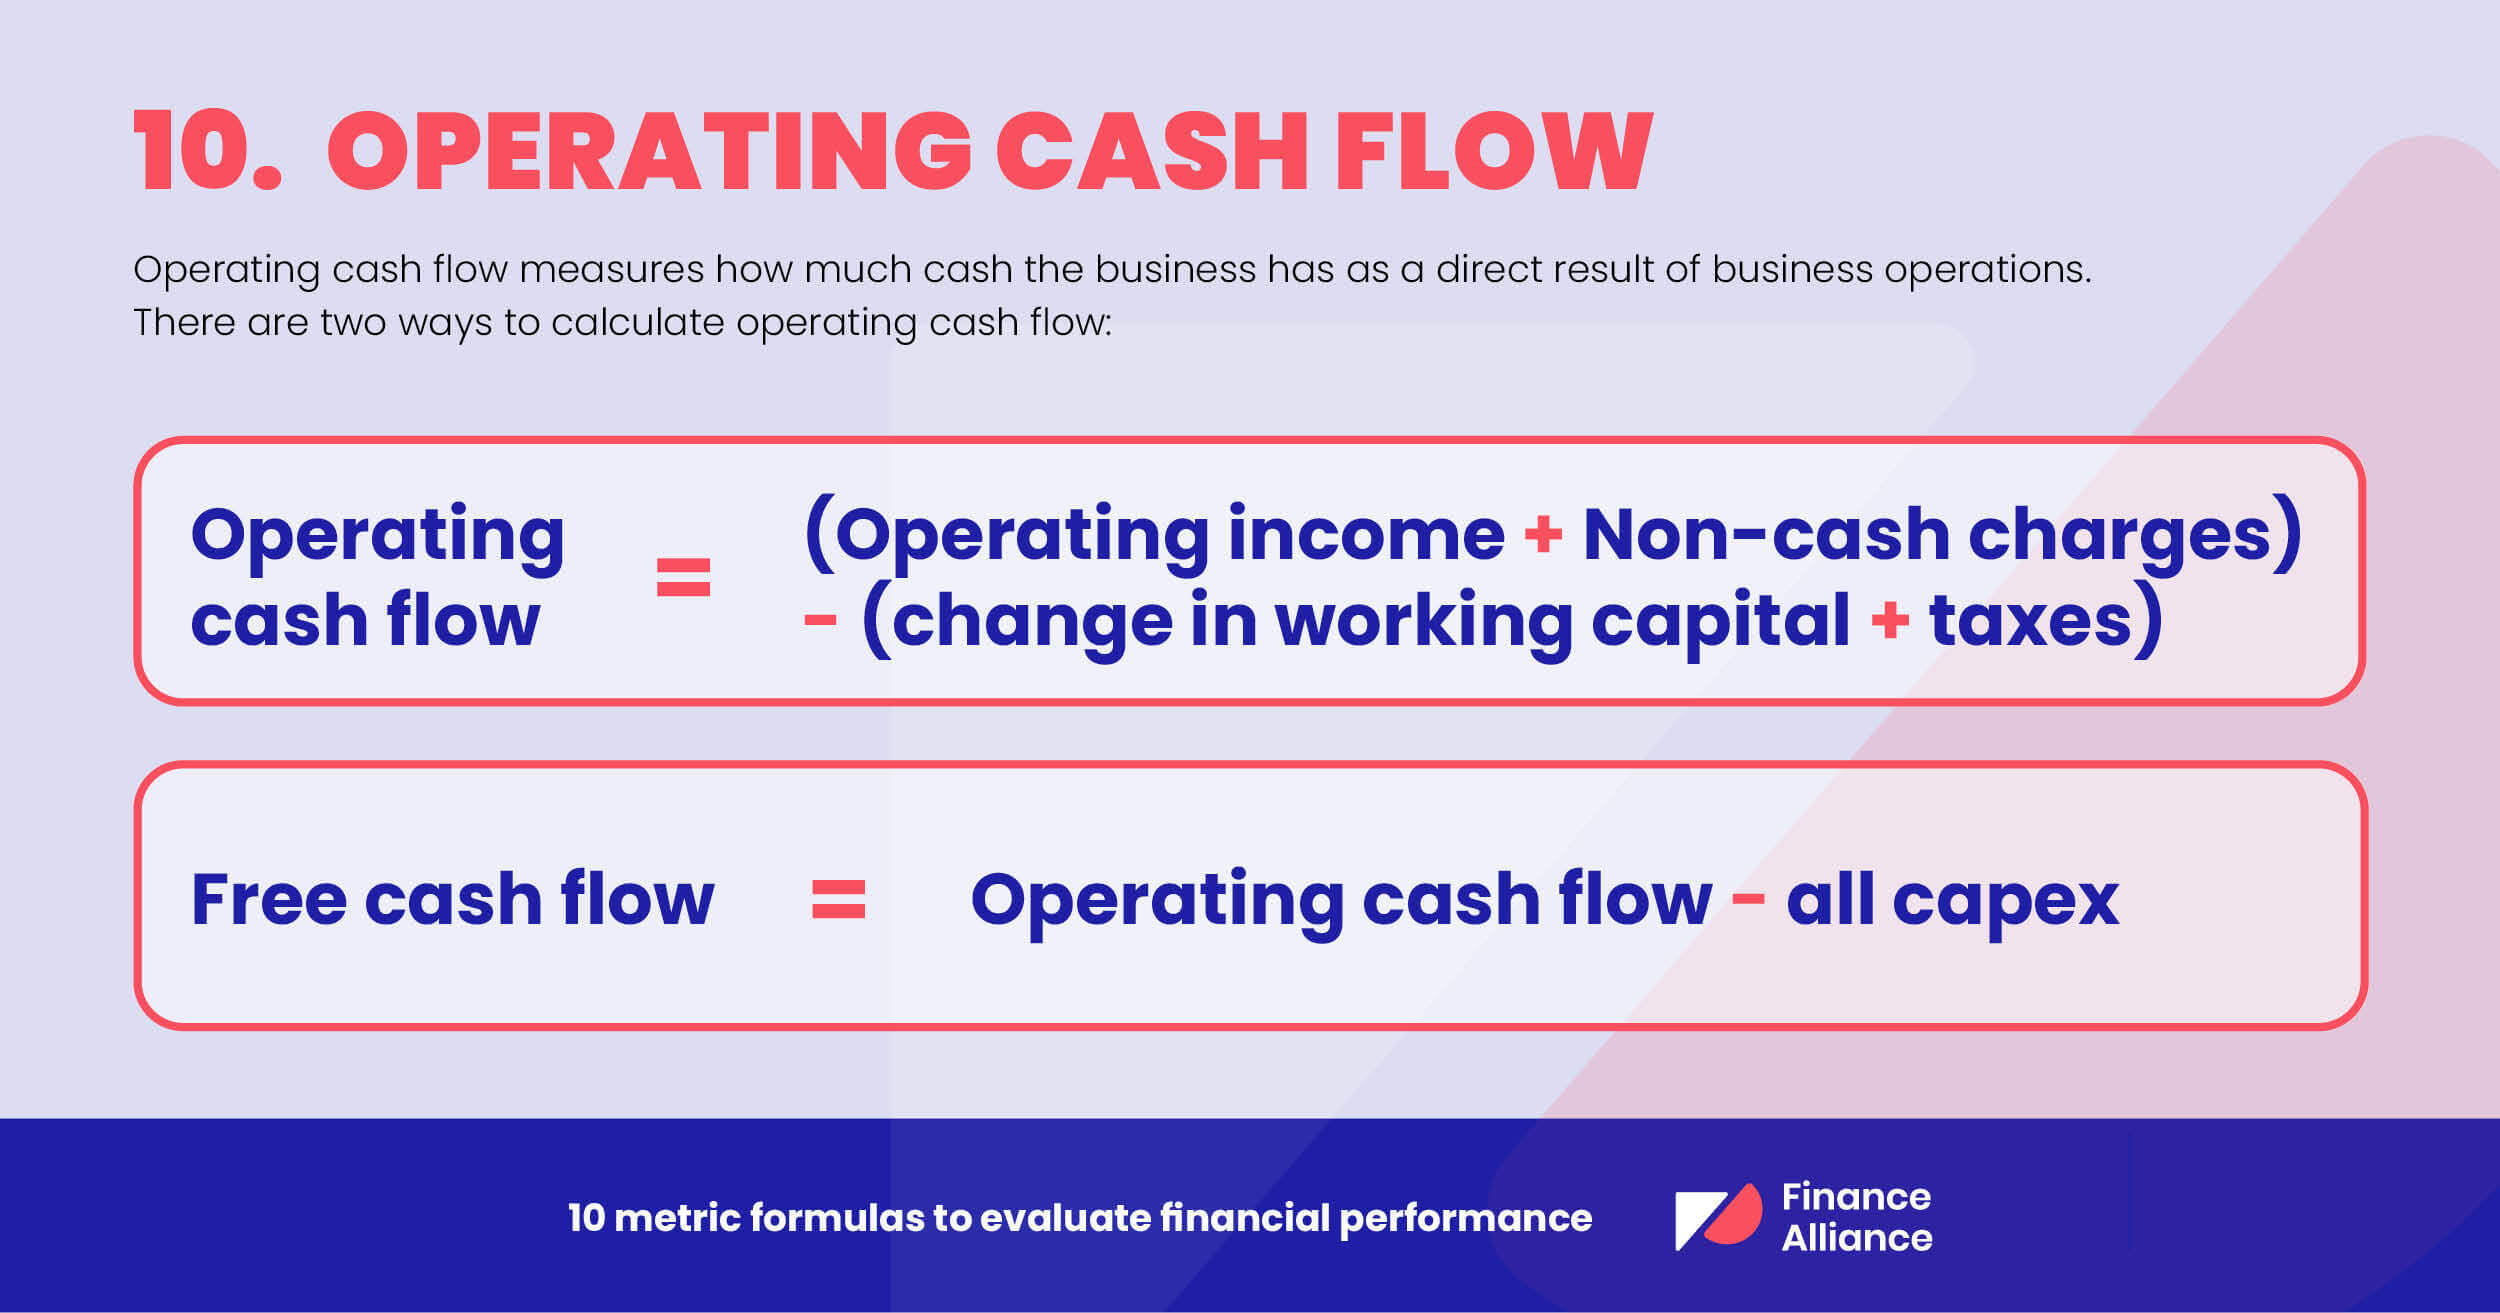 Financial performance analysis metric 10 - Operating cash flow